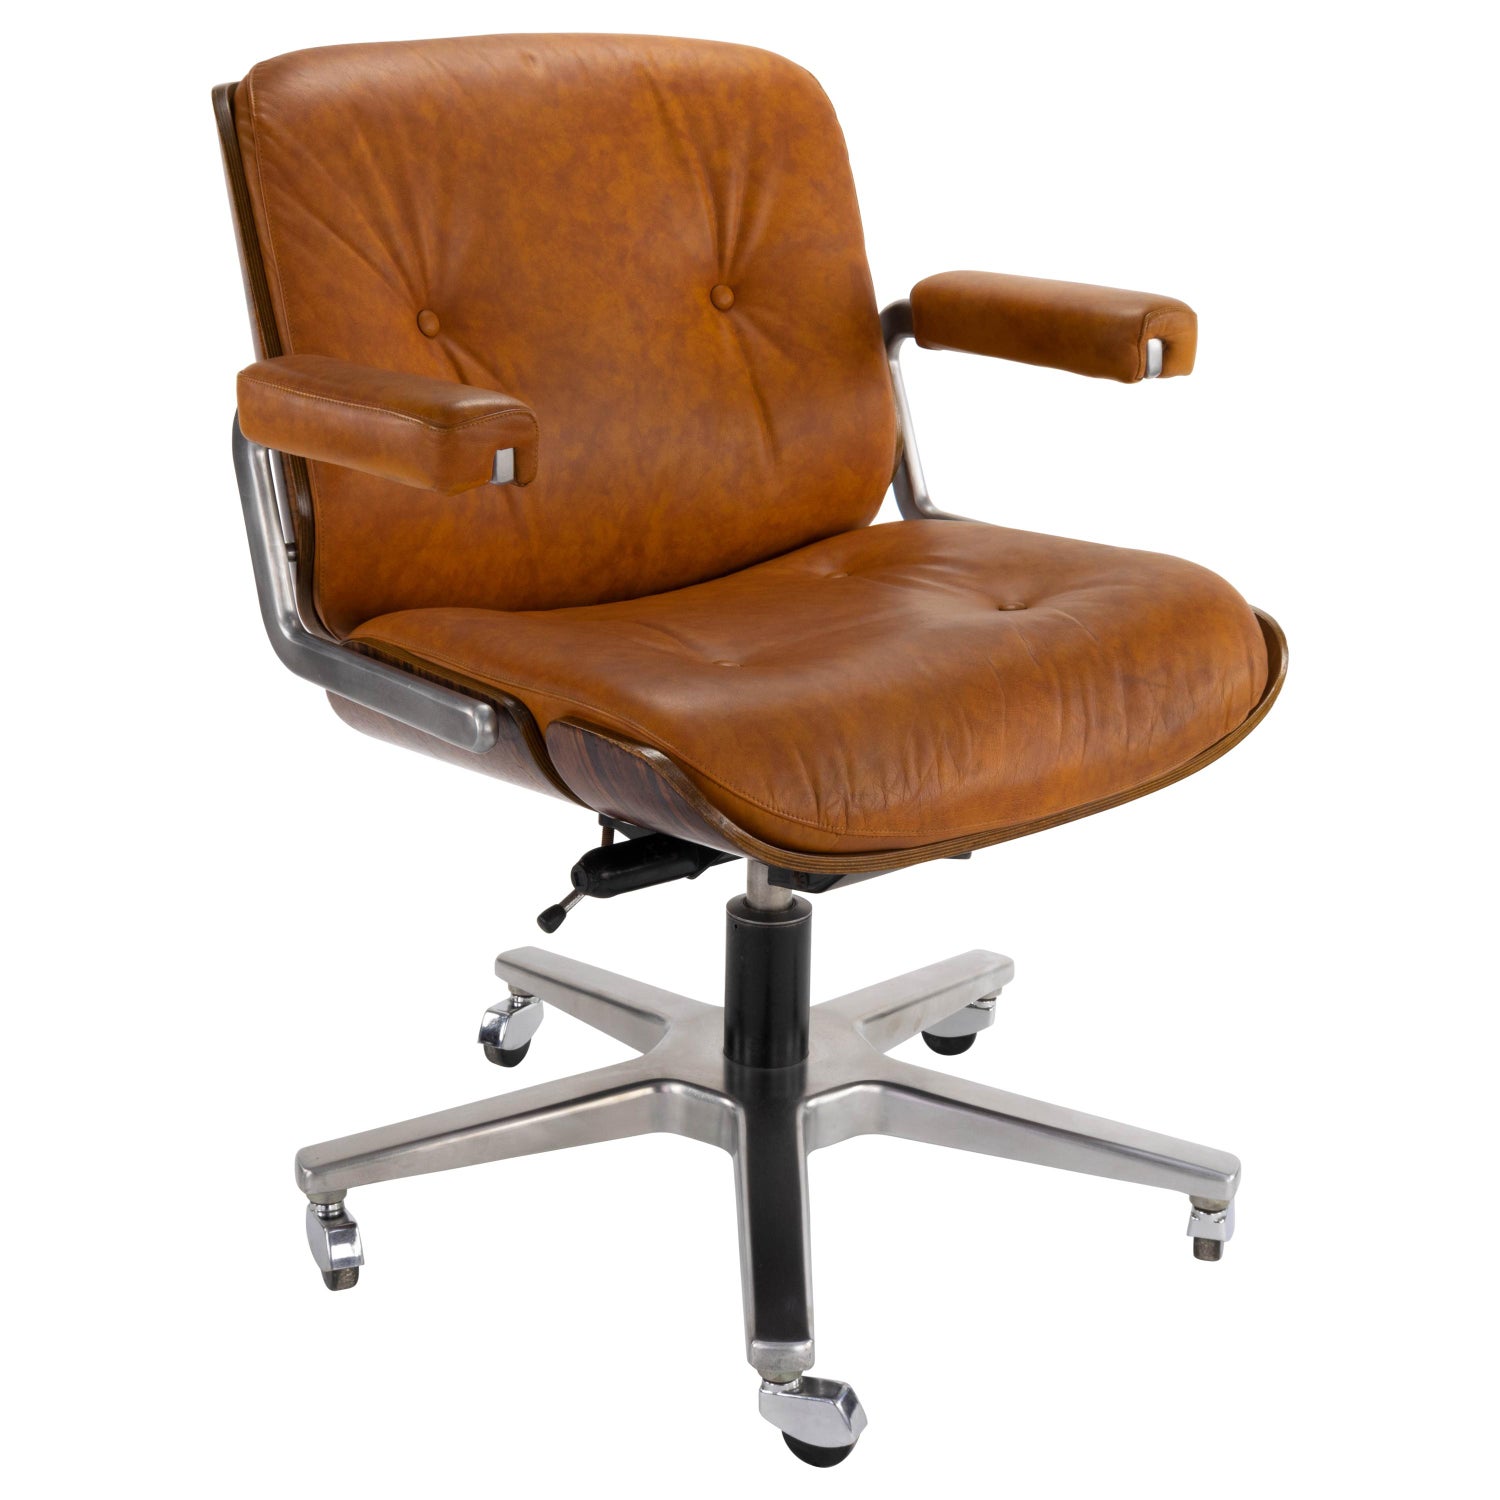 Martin Stoll - For Sale on 1stDibs | martin stoll chair, stoll chair, martin  stoll giroflex lounge chair